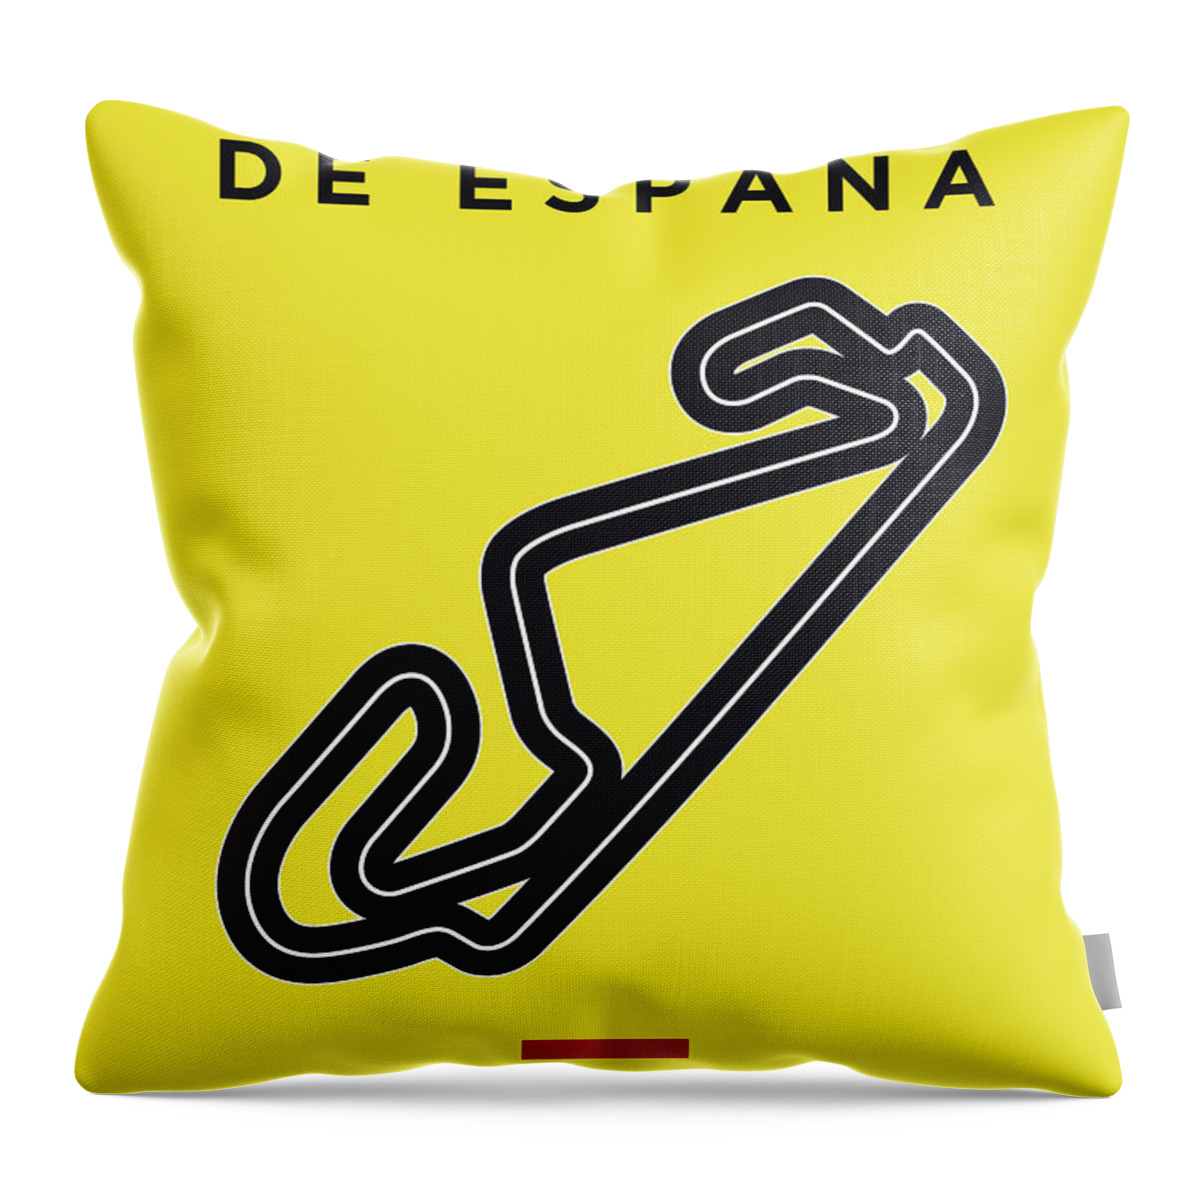 Limited Throw Pillow featuring the digital art My 2017 Gran Premio De Espana Minimal Poster by Chungkong Art